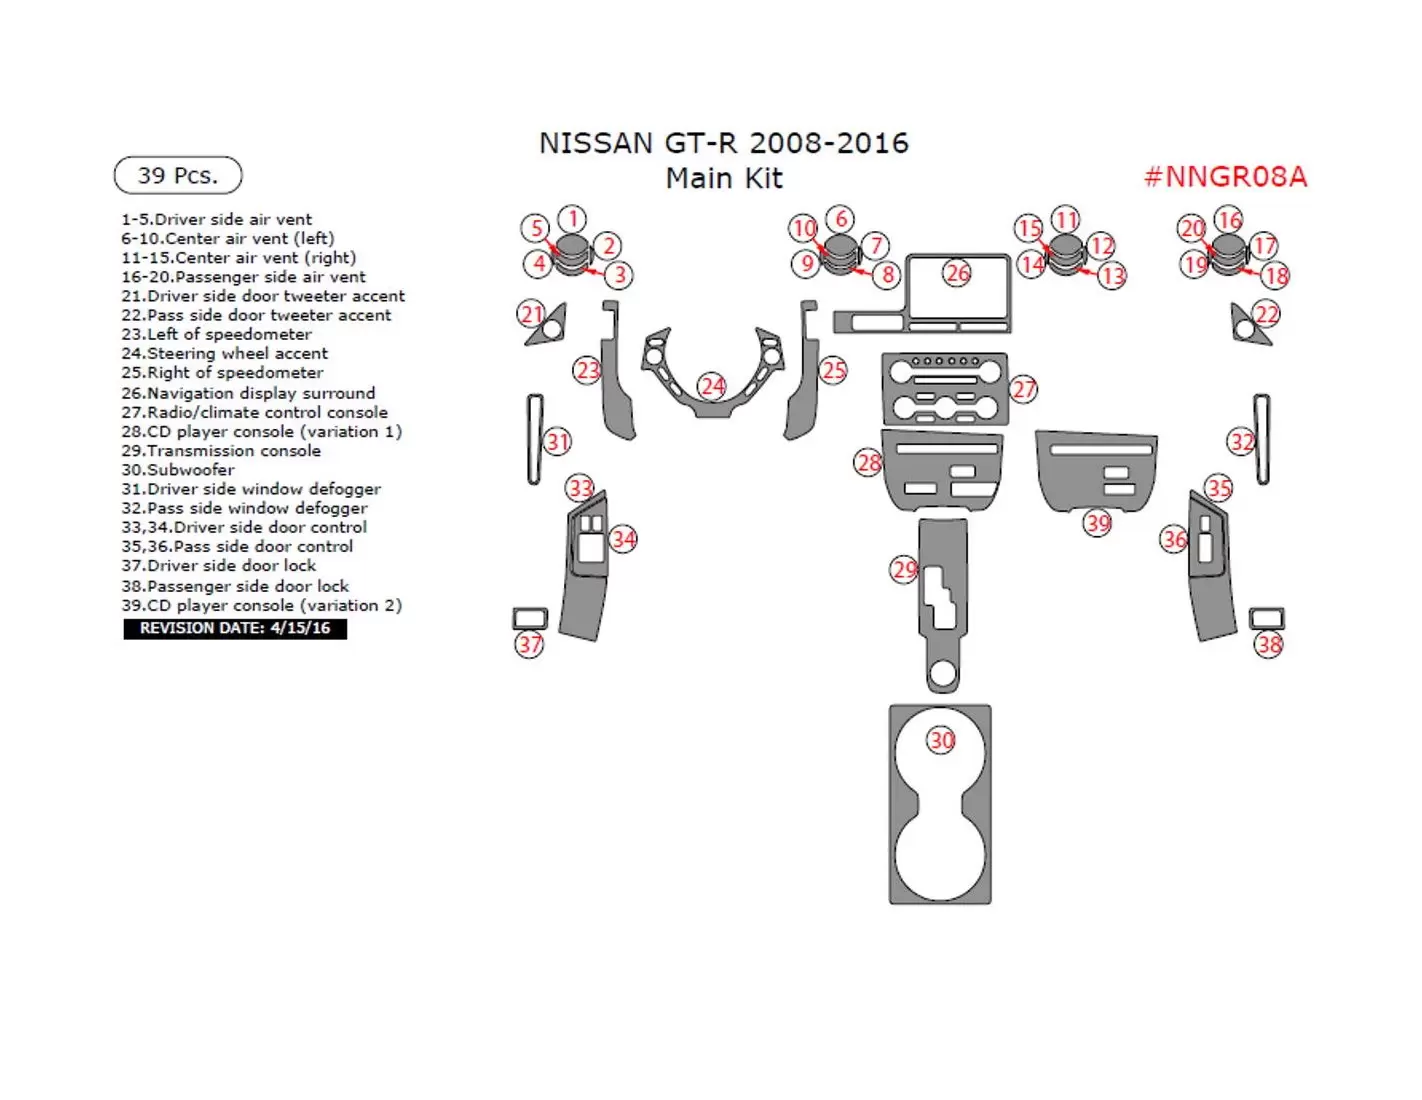 Nissan GT-R 2008-2016 belangrijkste interieur dashboard trim kit, 39 stuks